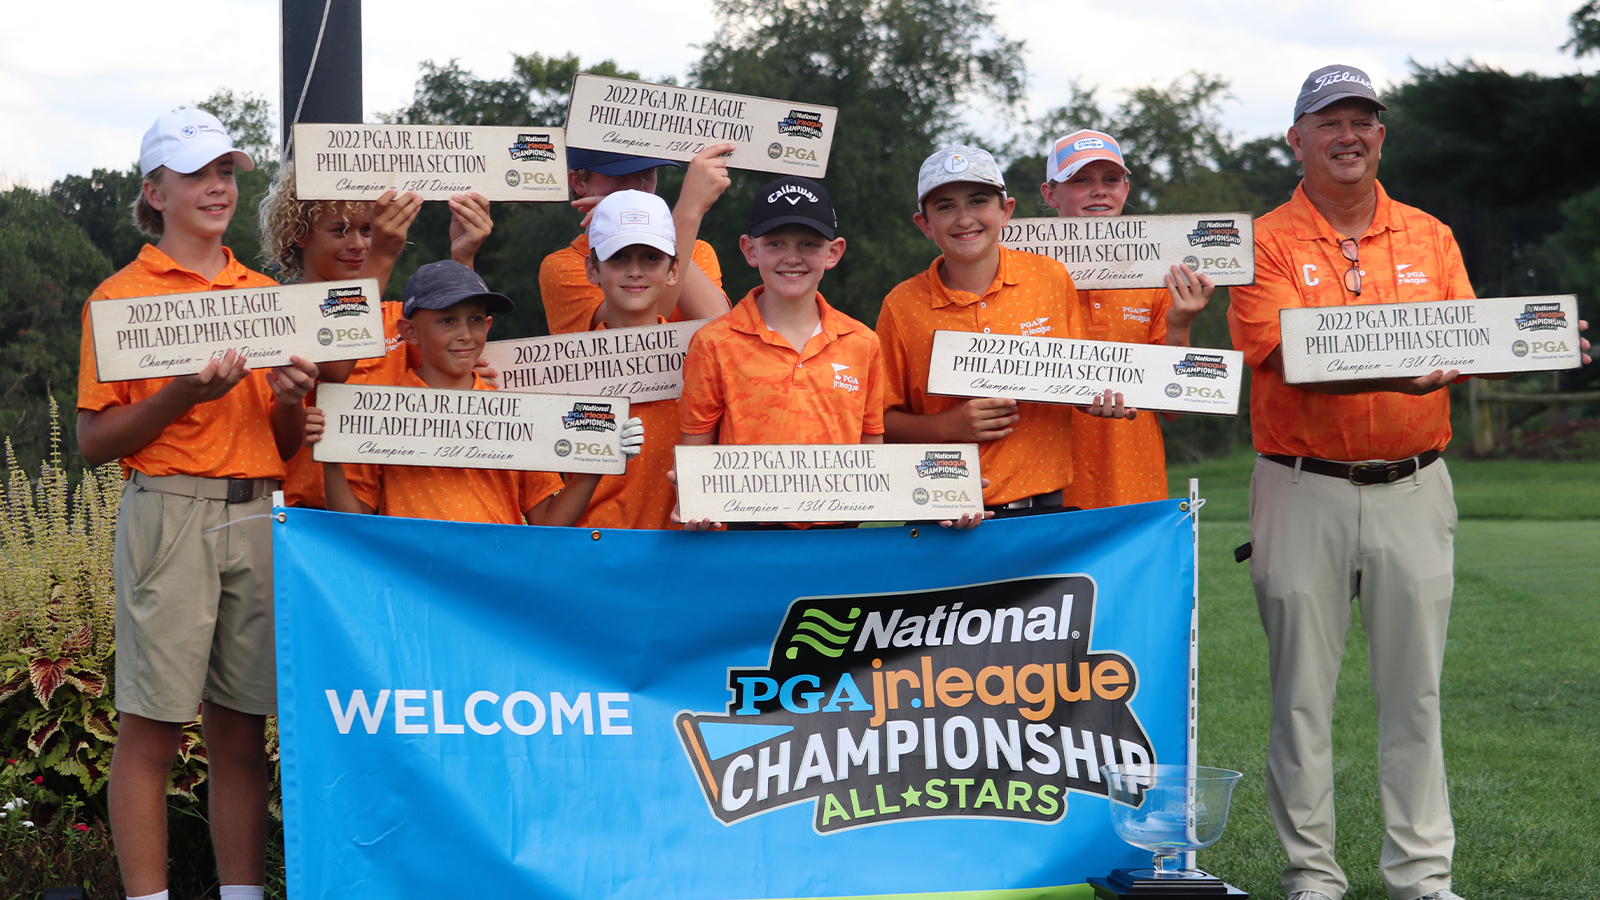   
																PGA Jr. League: Team Delaware All-Stars Win Philadelphia PGA Section Championship 
															 